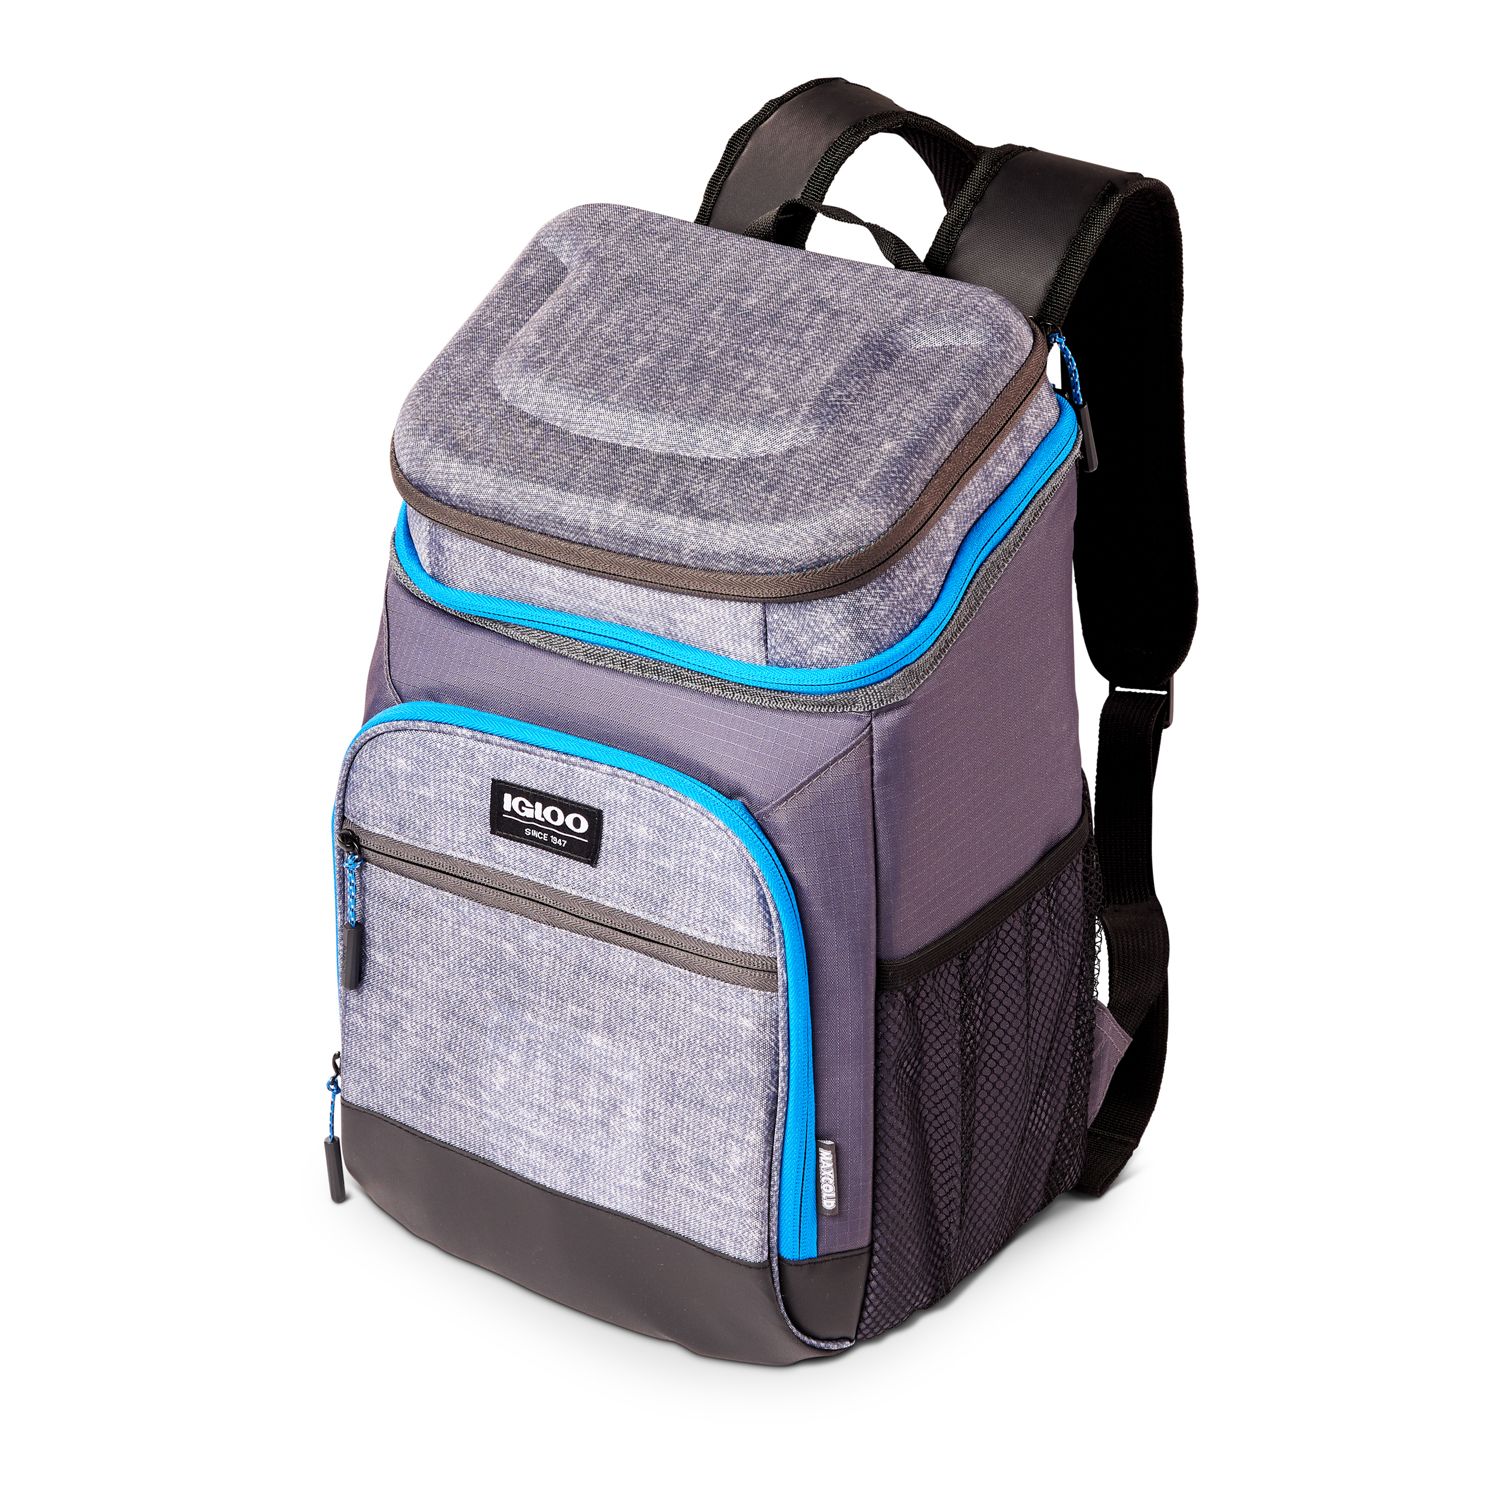 igloo maxcold backpack